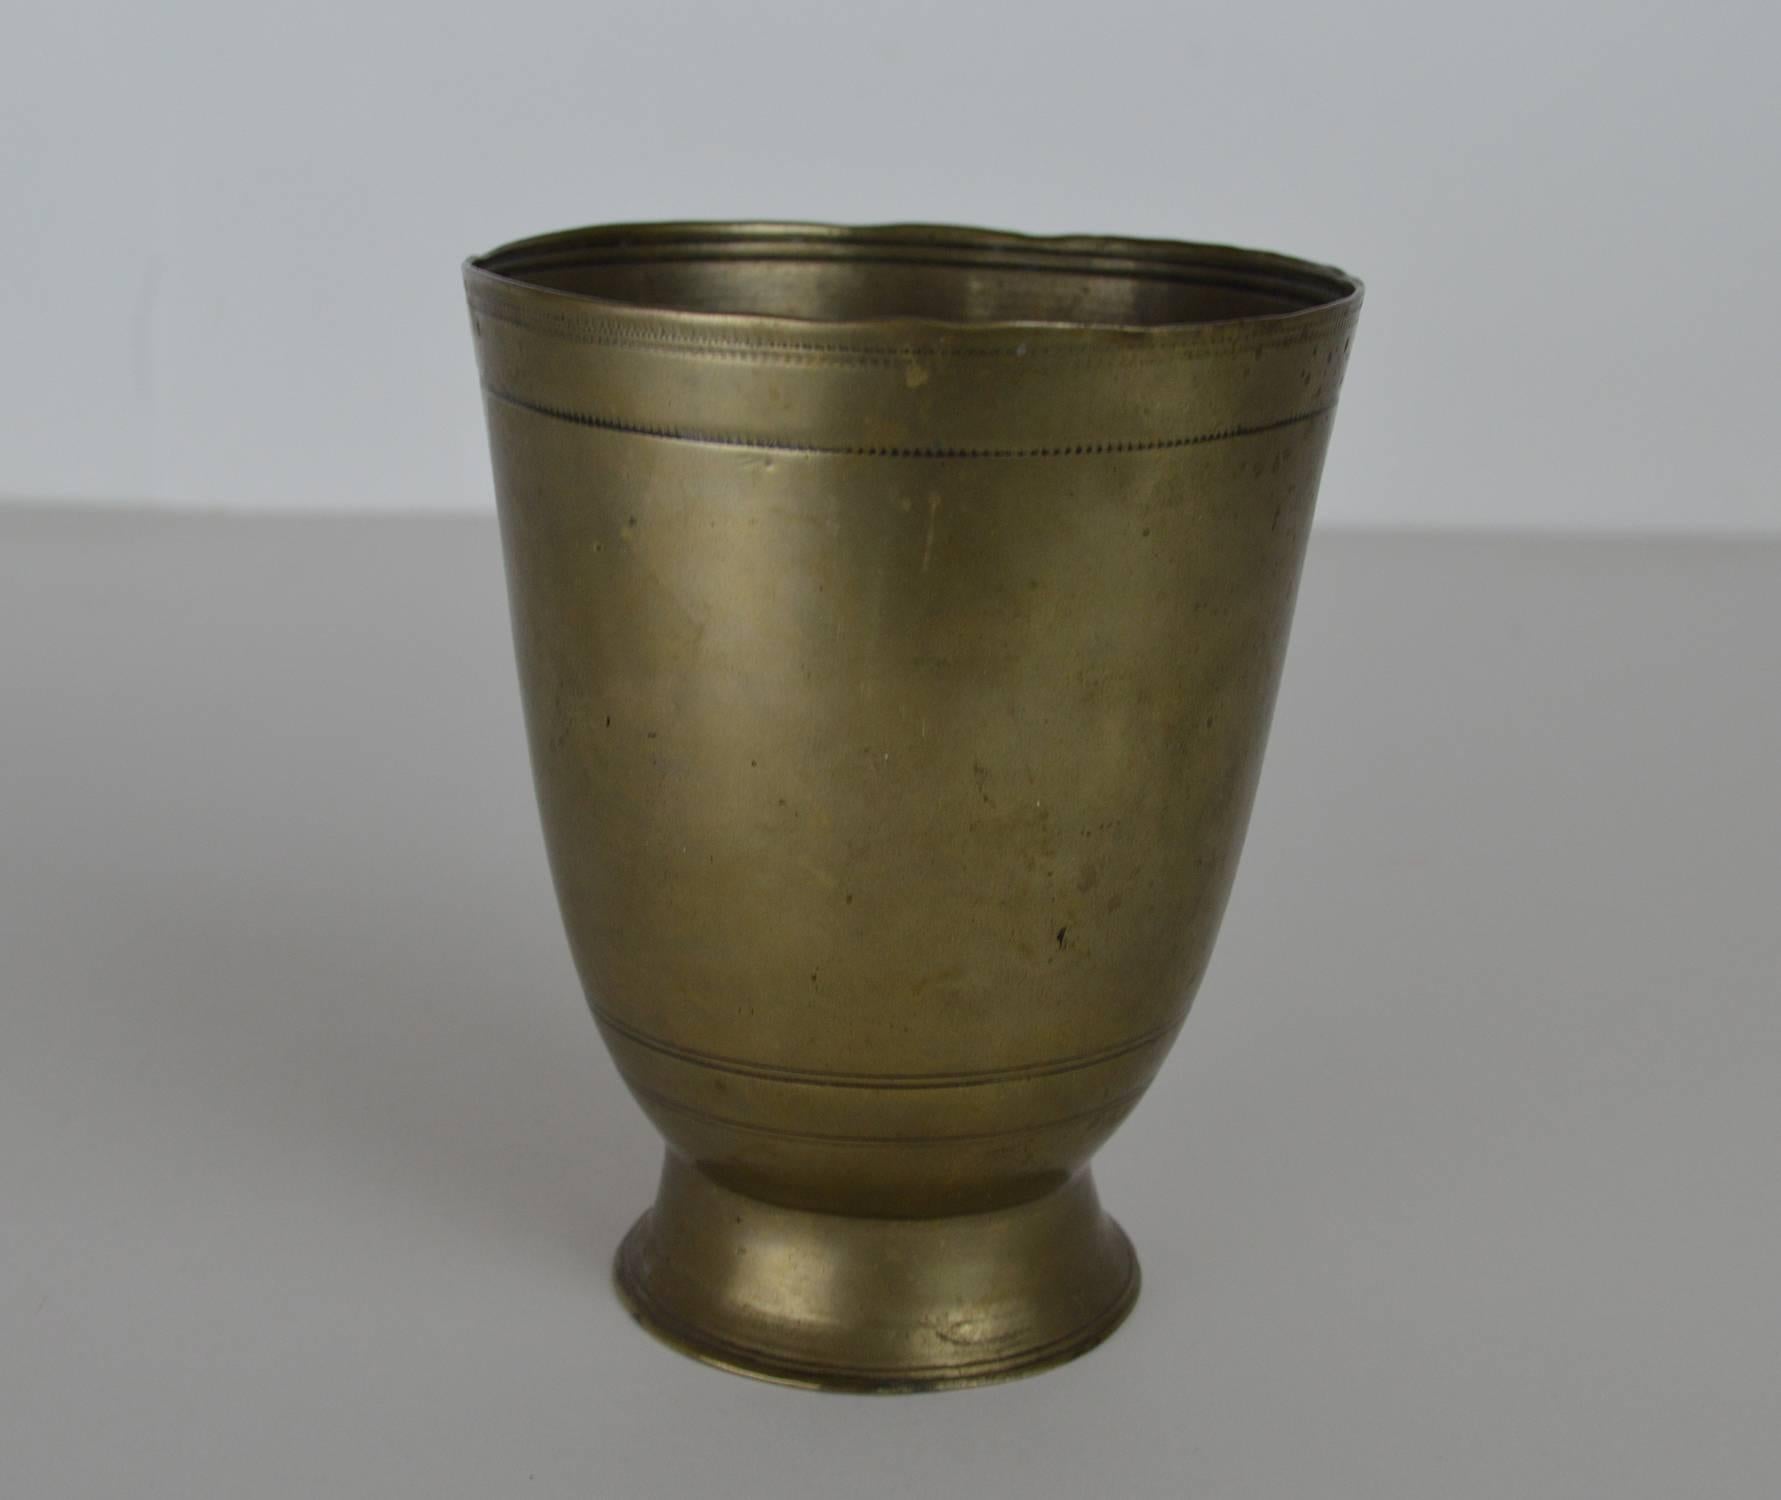 Gustavian Antique German Paktong Tumbler Cup, 17th Century